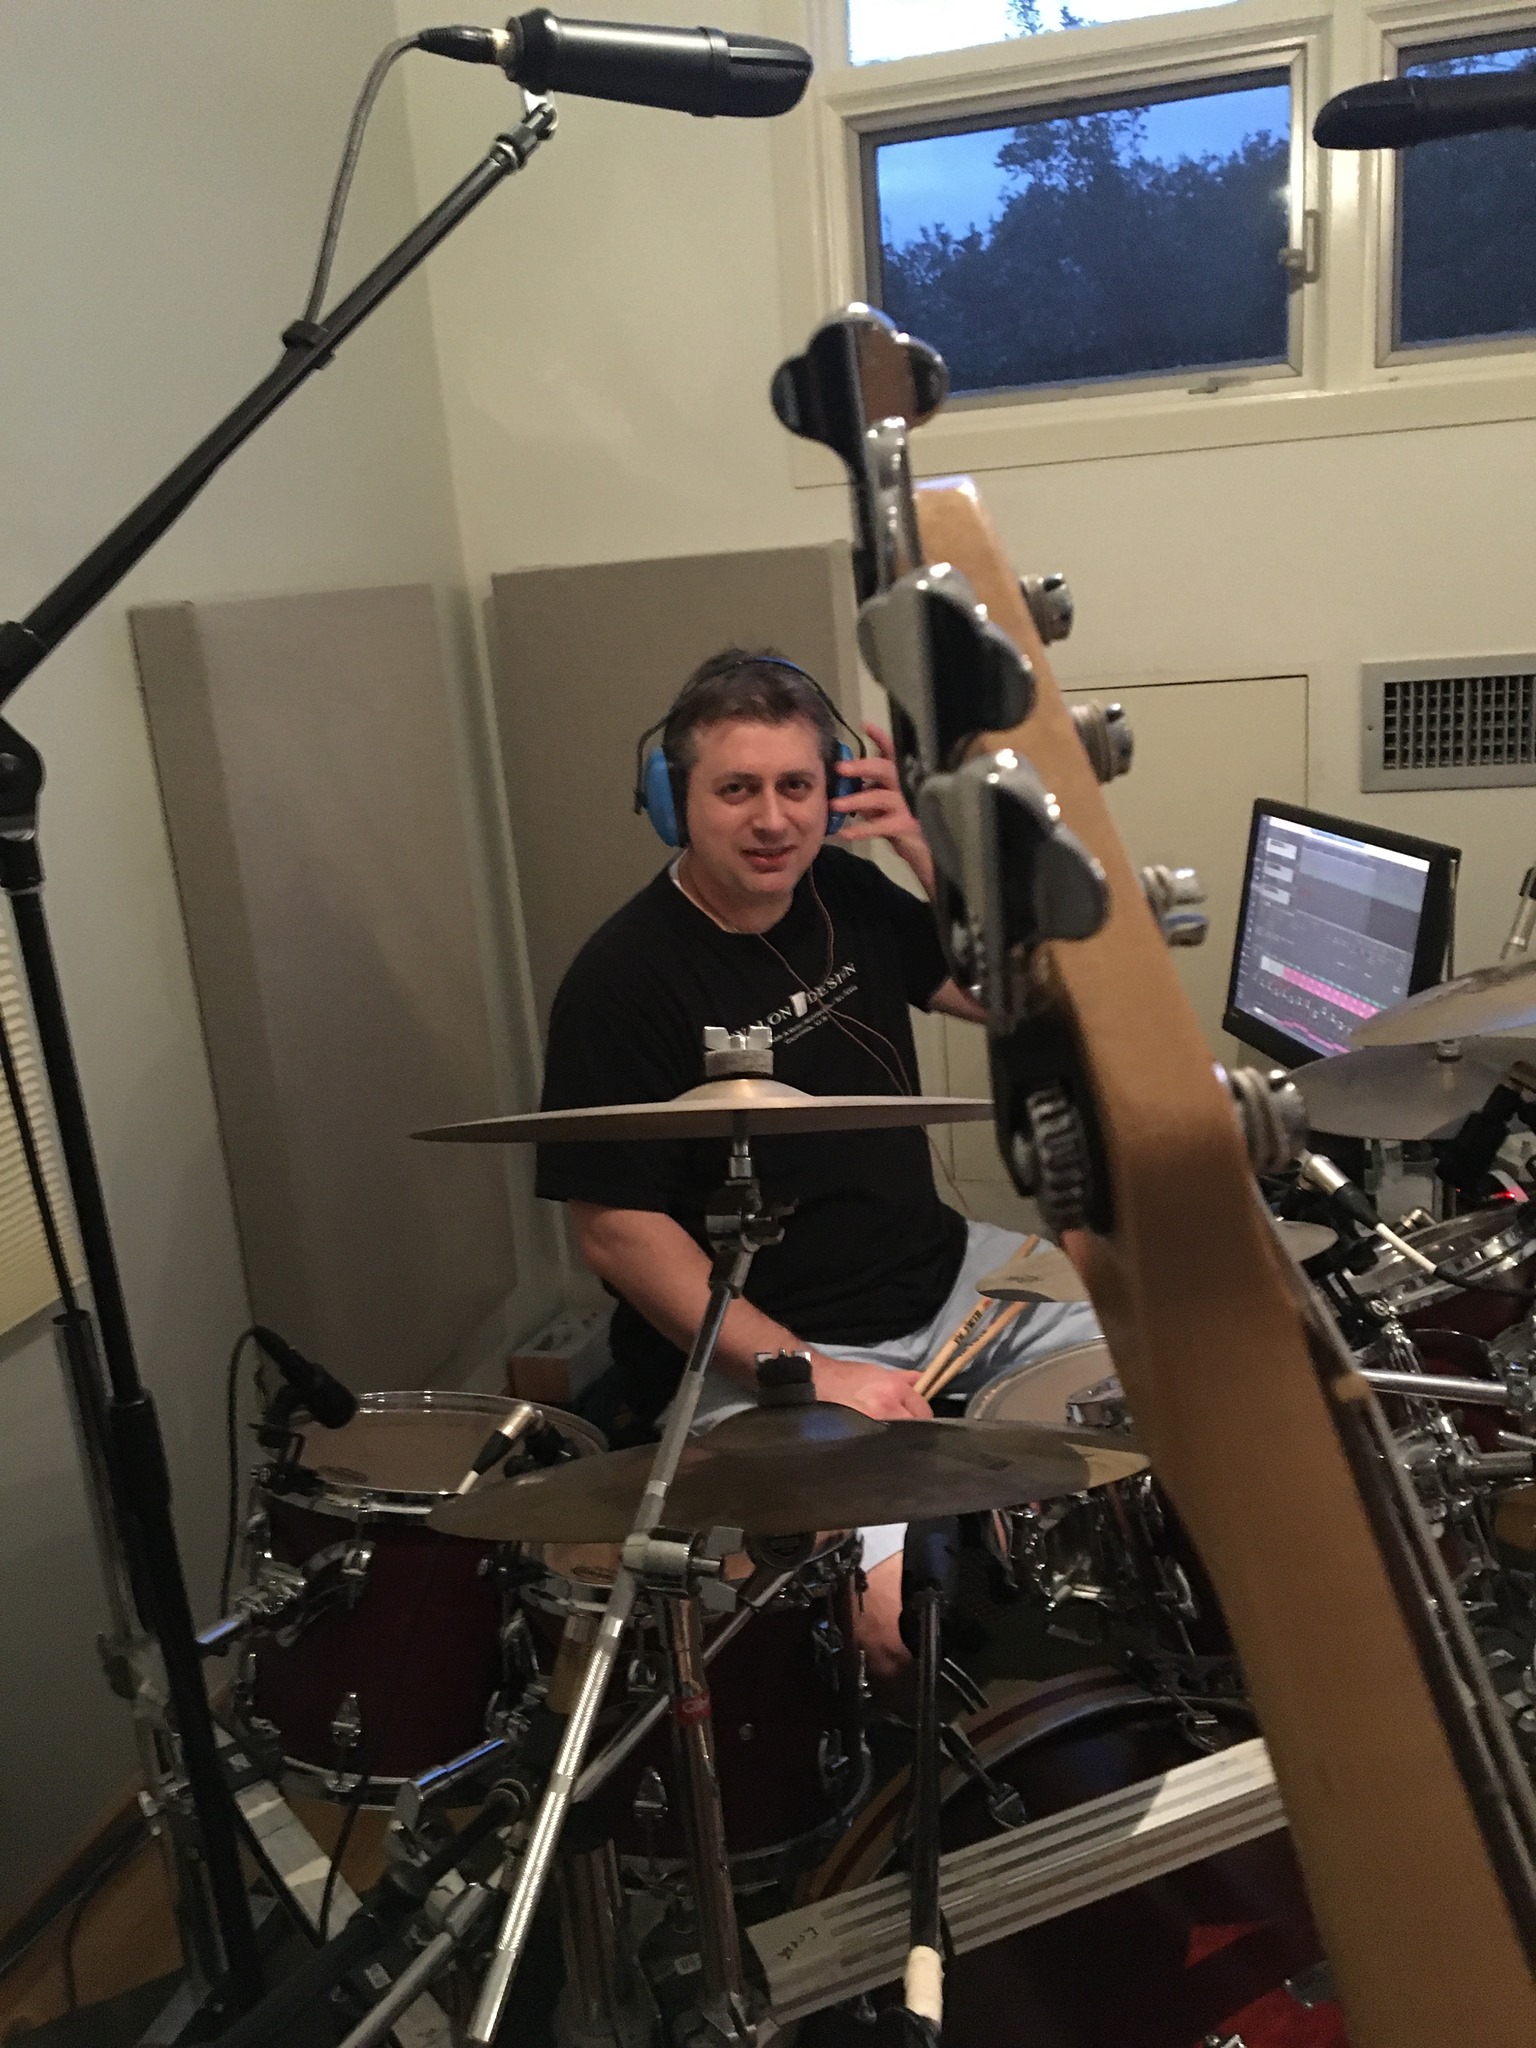 Andre recording in the studio